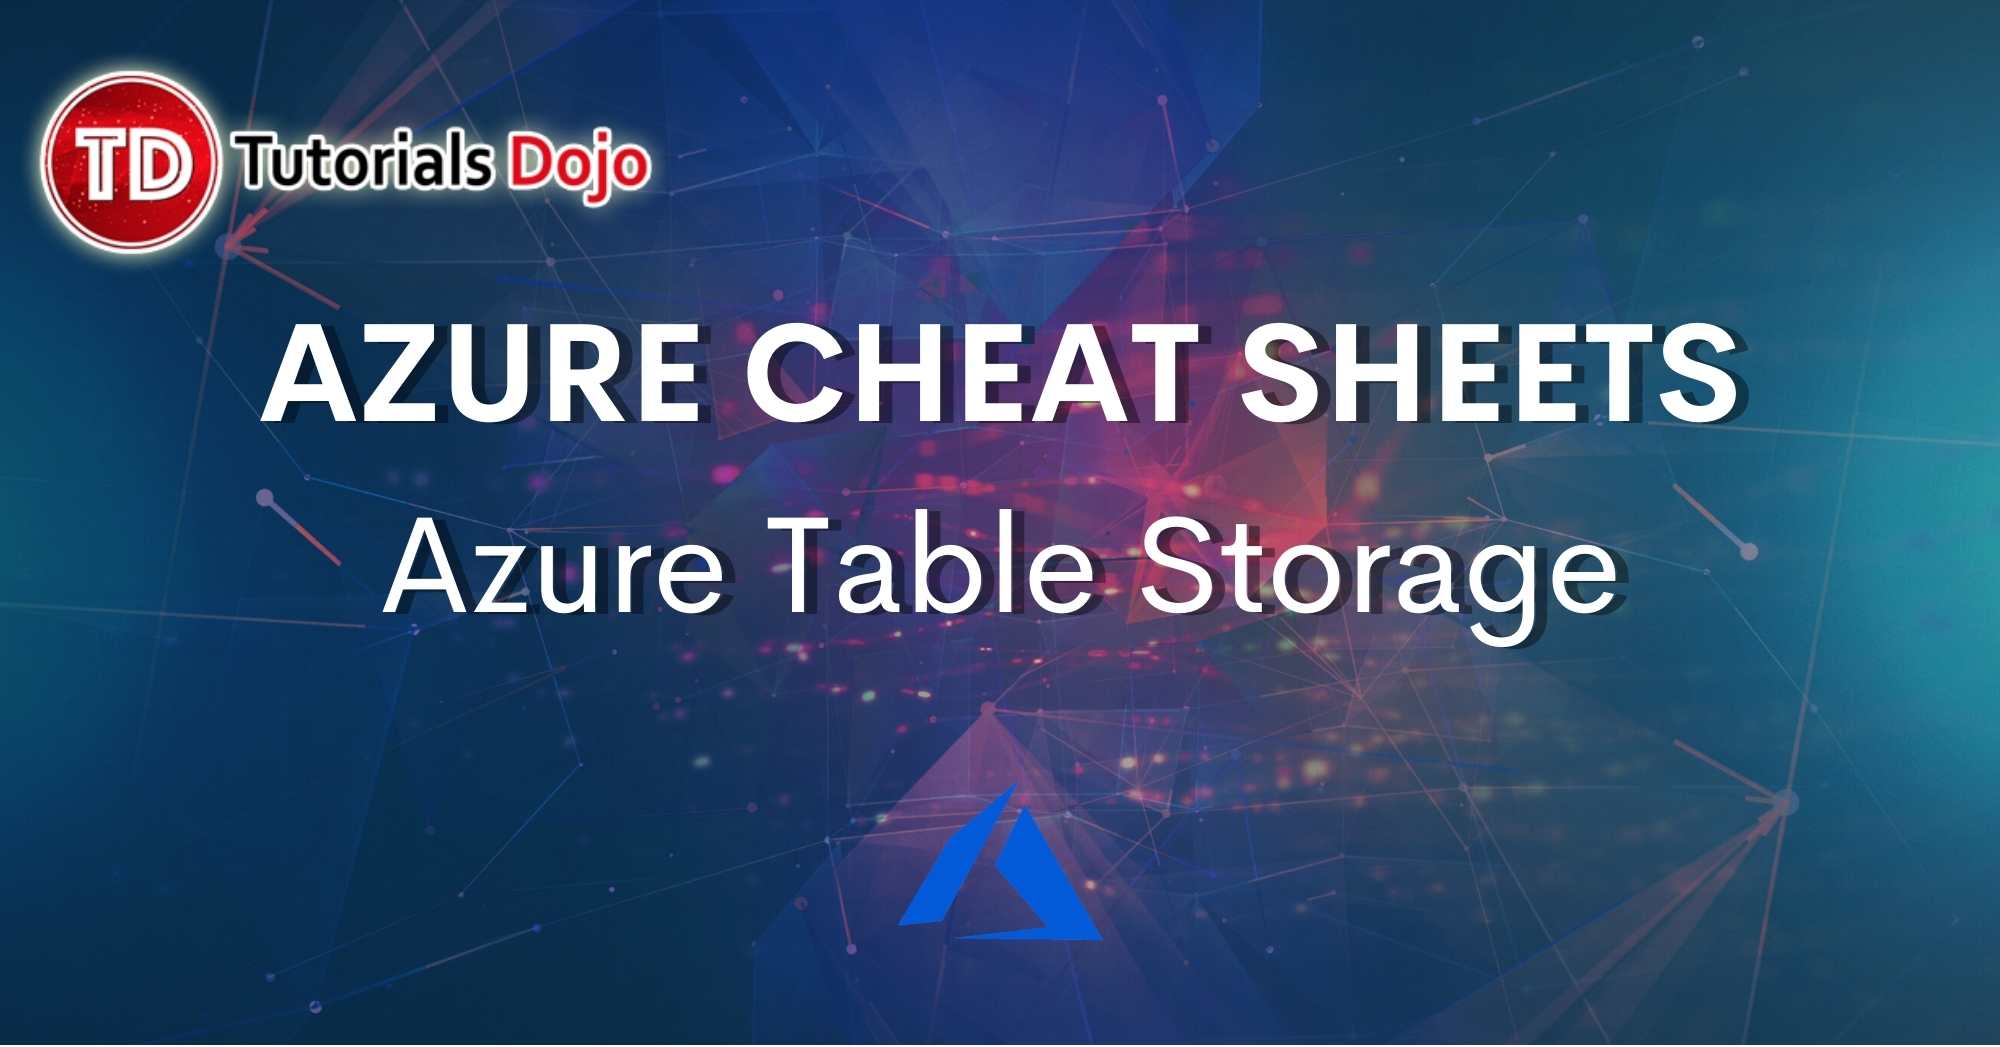 Azure Table Storage